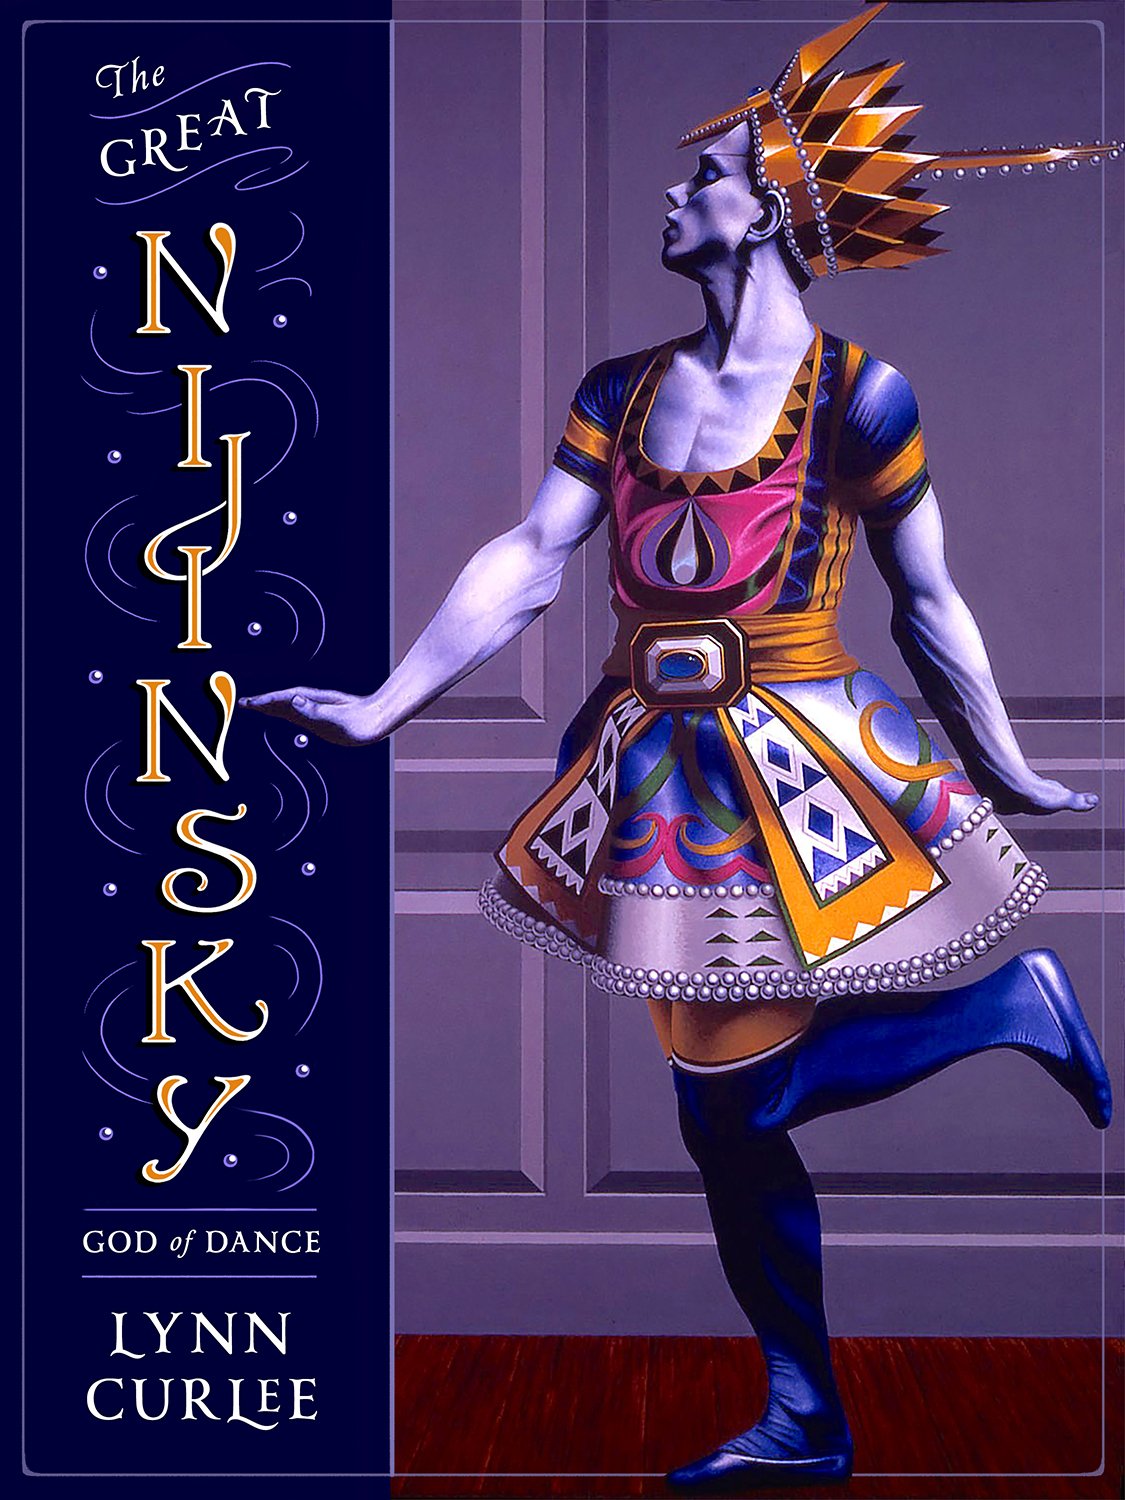 The Great Nijinsky God of Dance